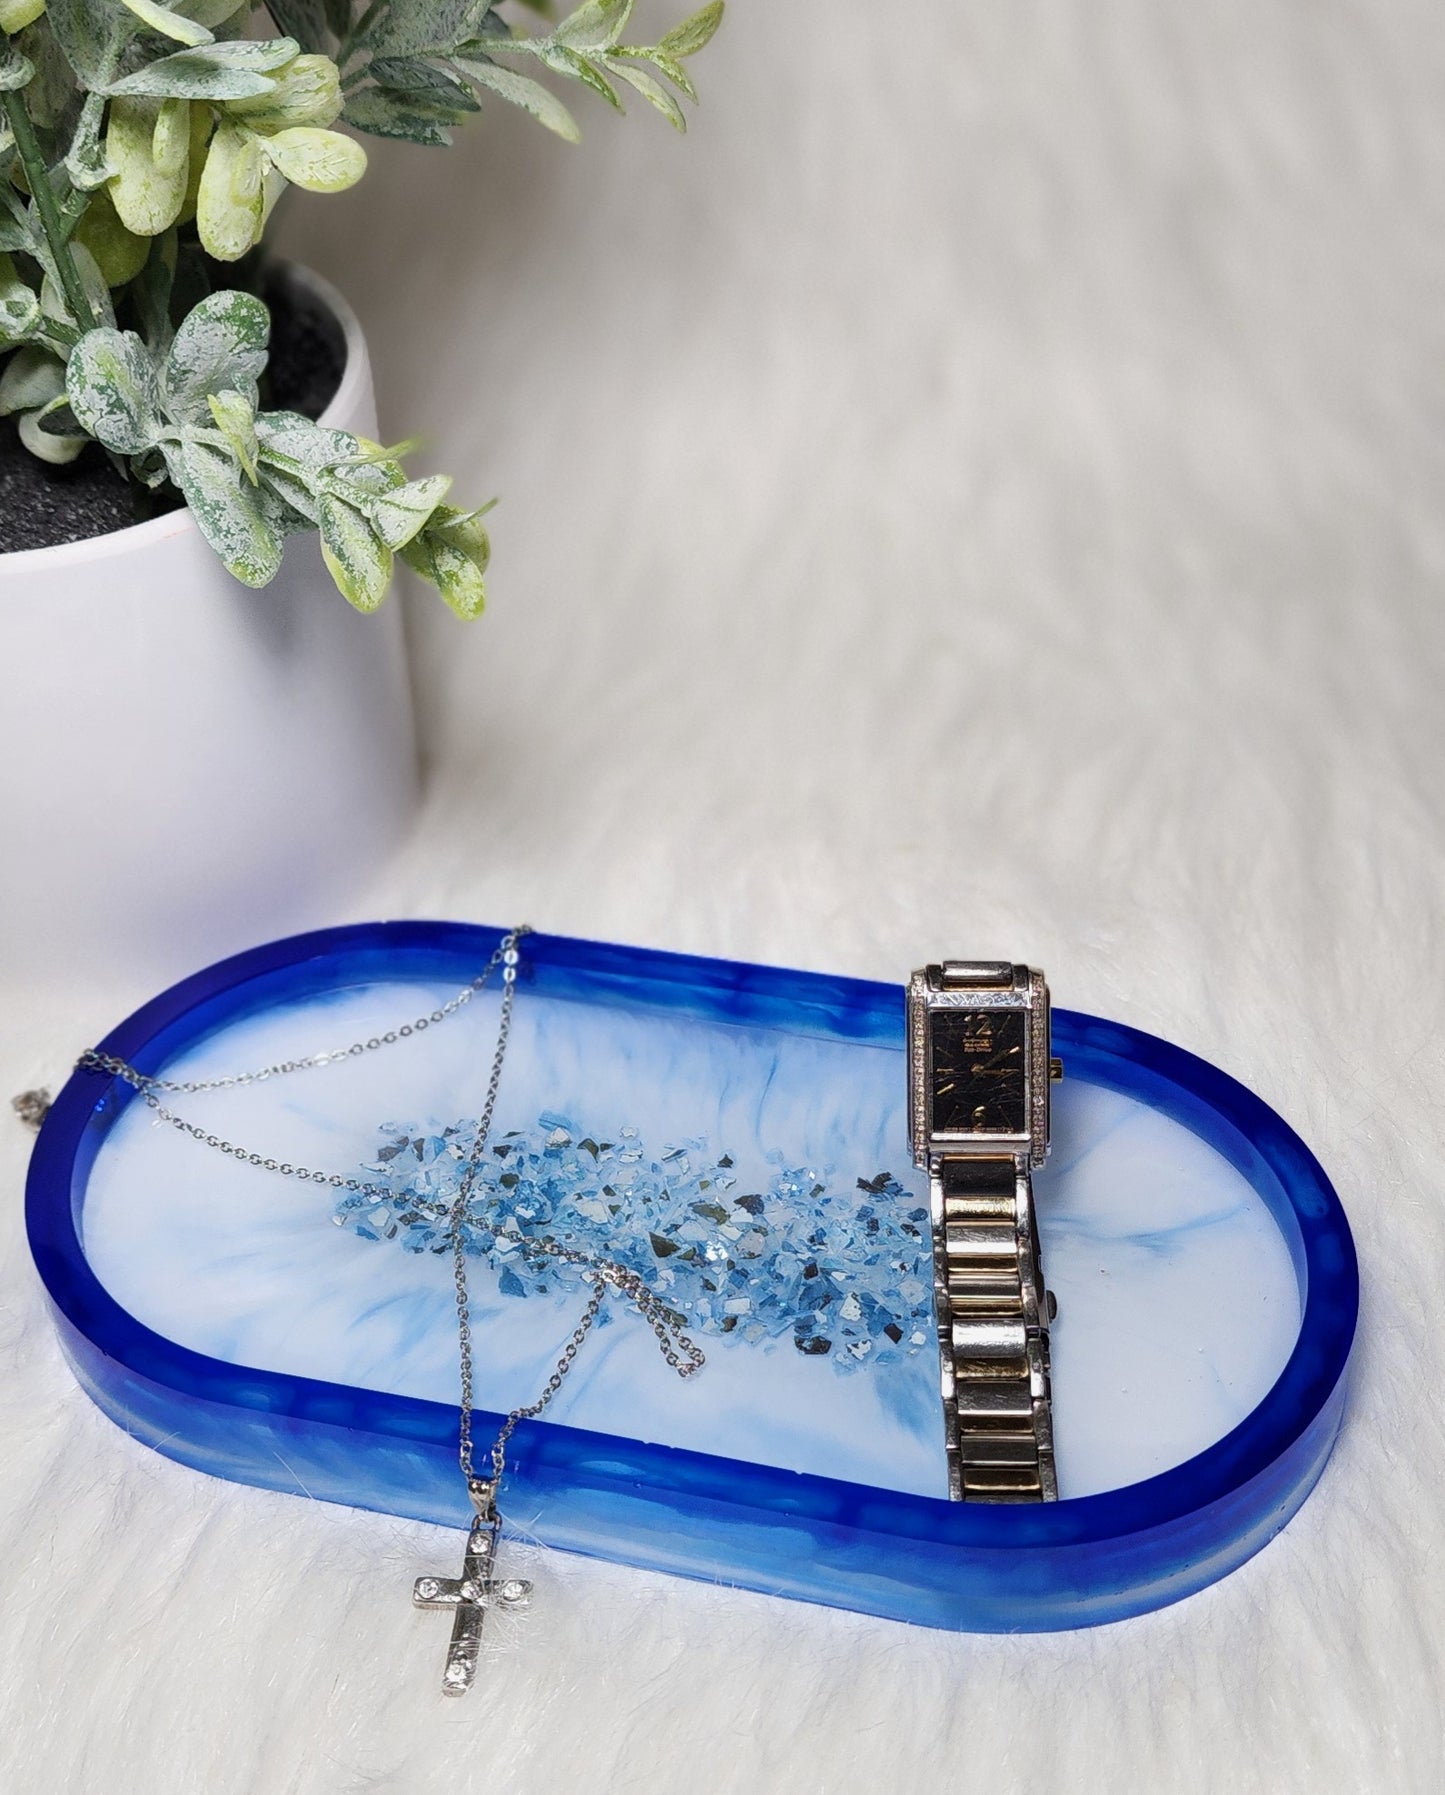 Blue with Sea Glass Jewelry Tray